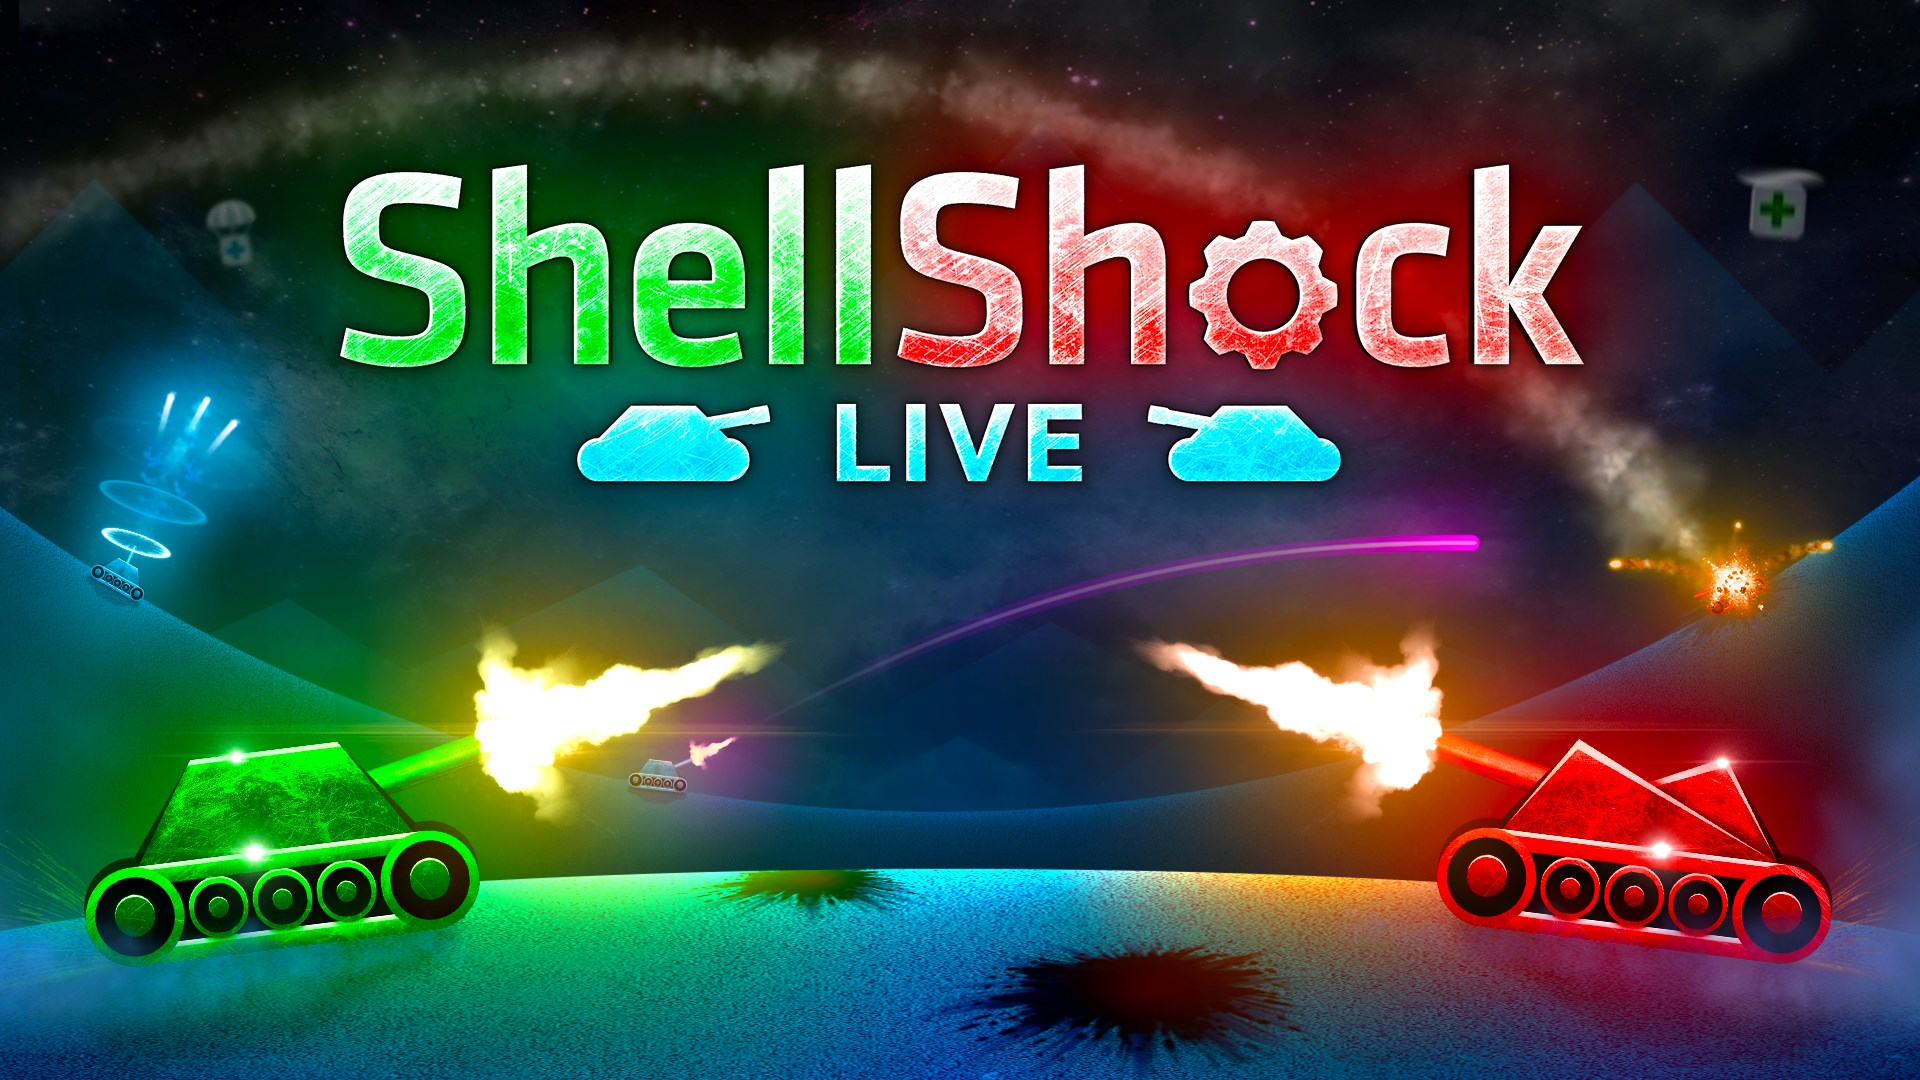 Ultimate Player achievement in ShellShock Live